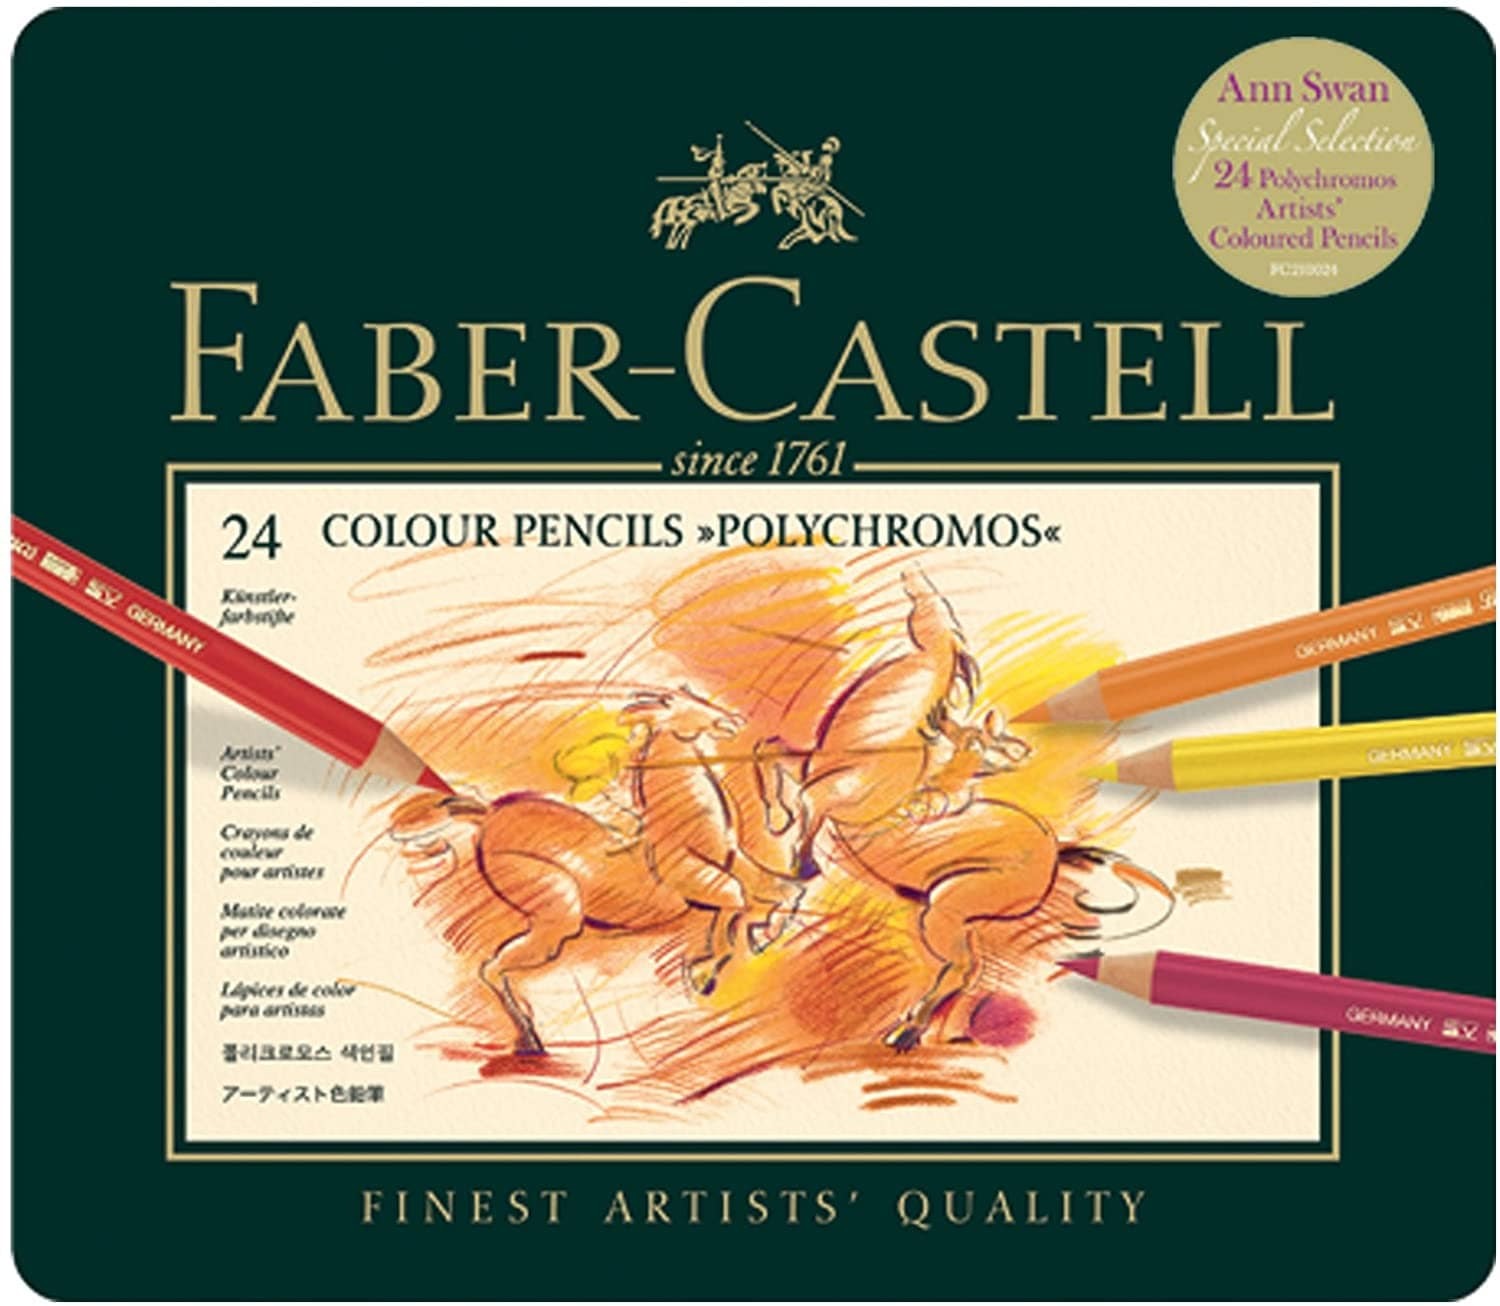 Faber-Castell Polychromos Tin of 24 Colour Pencils (Ann Swan Selection) FC210024